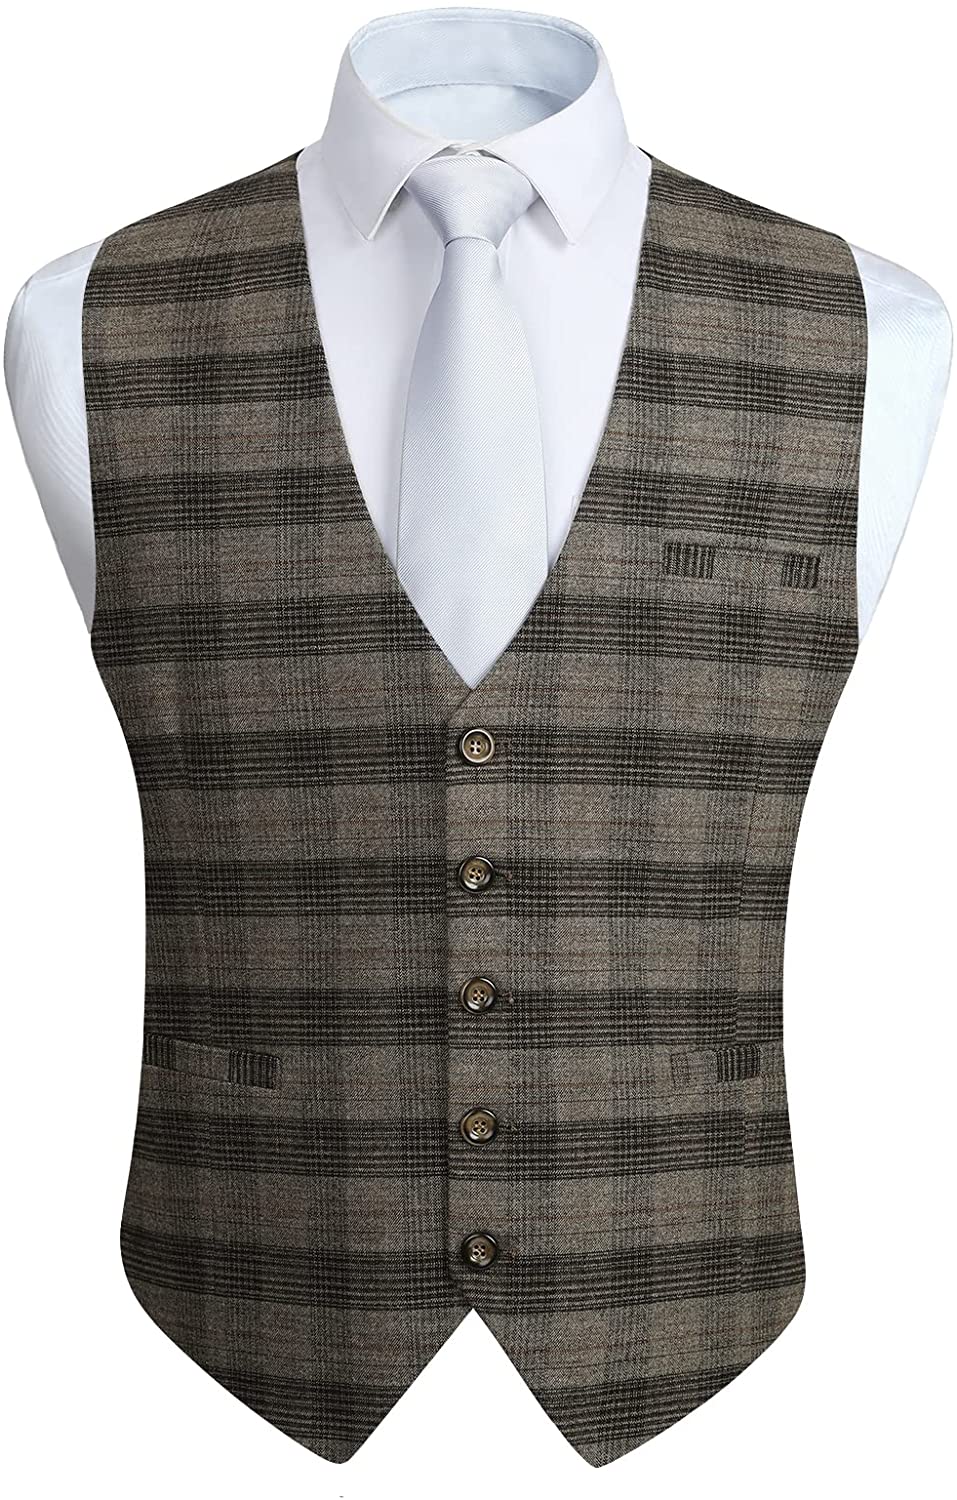 Men's Suit Vest Formal Plaid Dress Waistcoat for Men Business Slim Fit Vests with 3 Pocket Vest for Suits or Tuxedo 